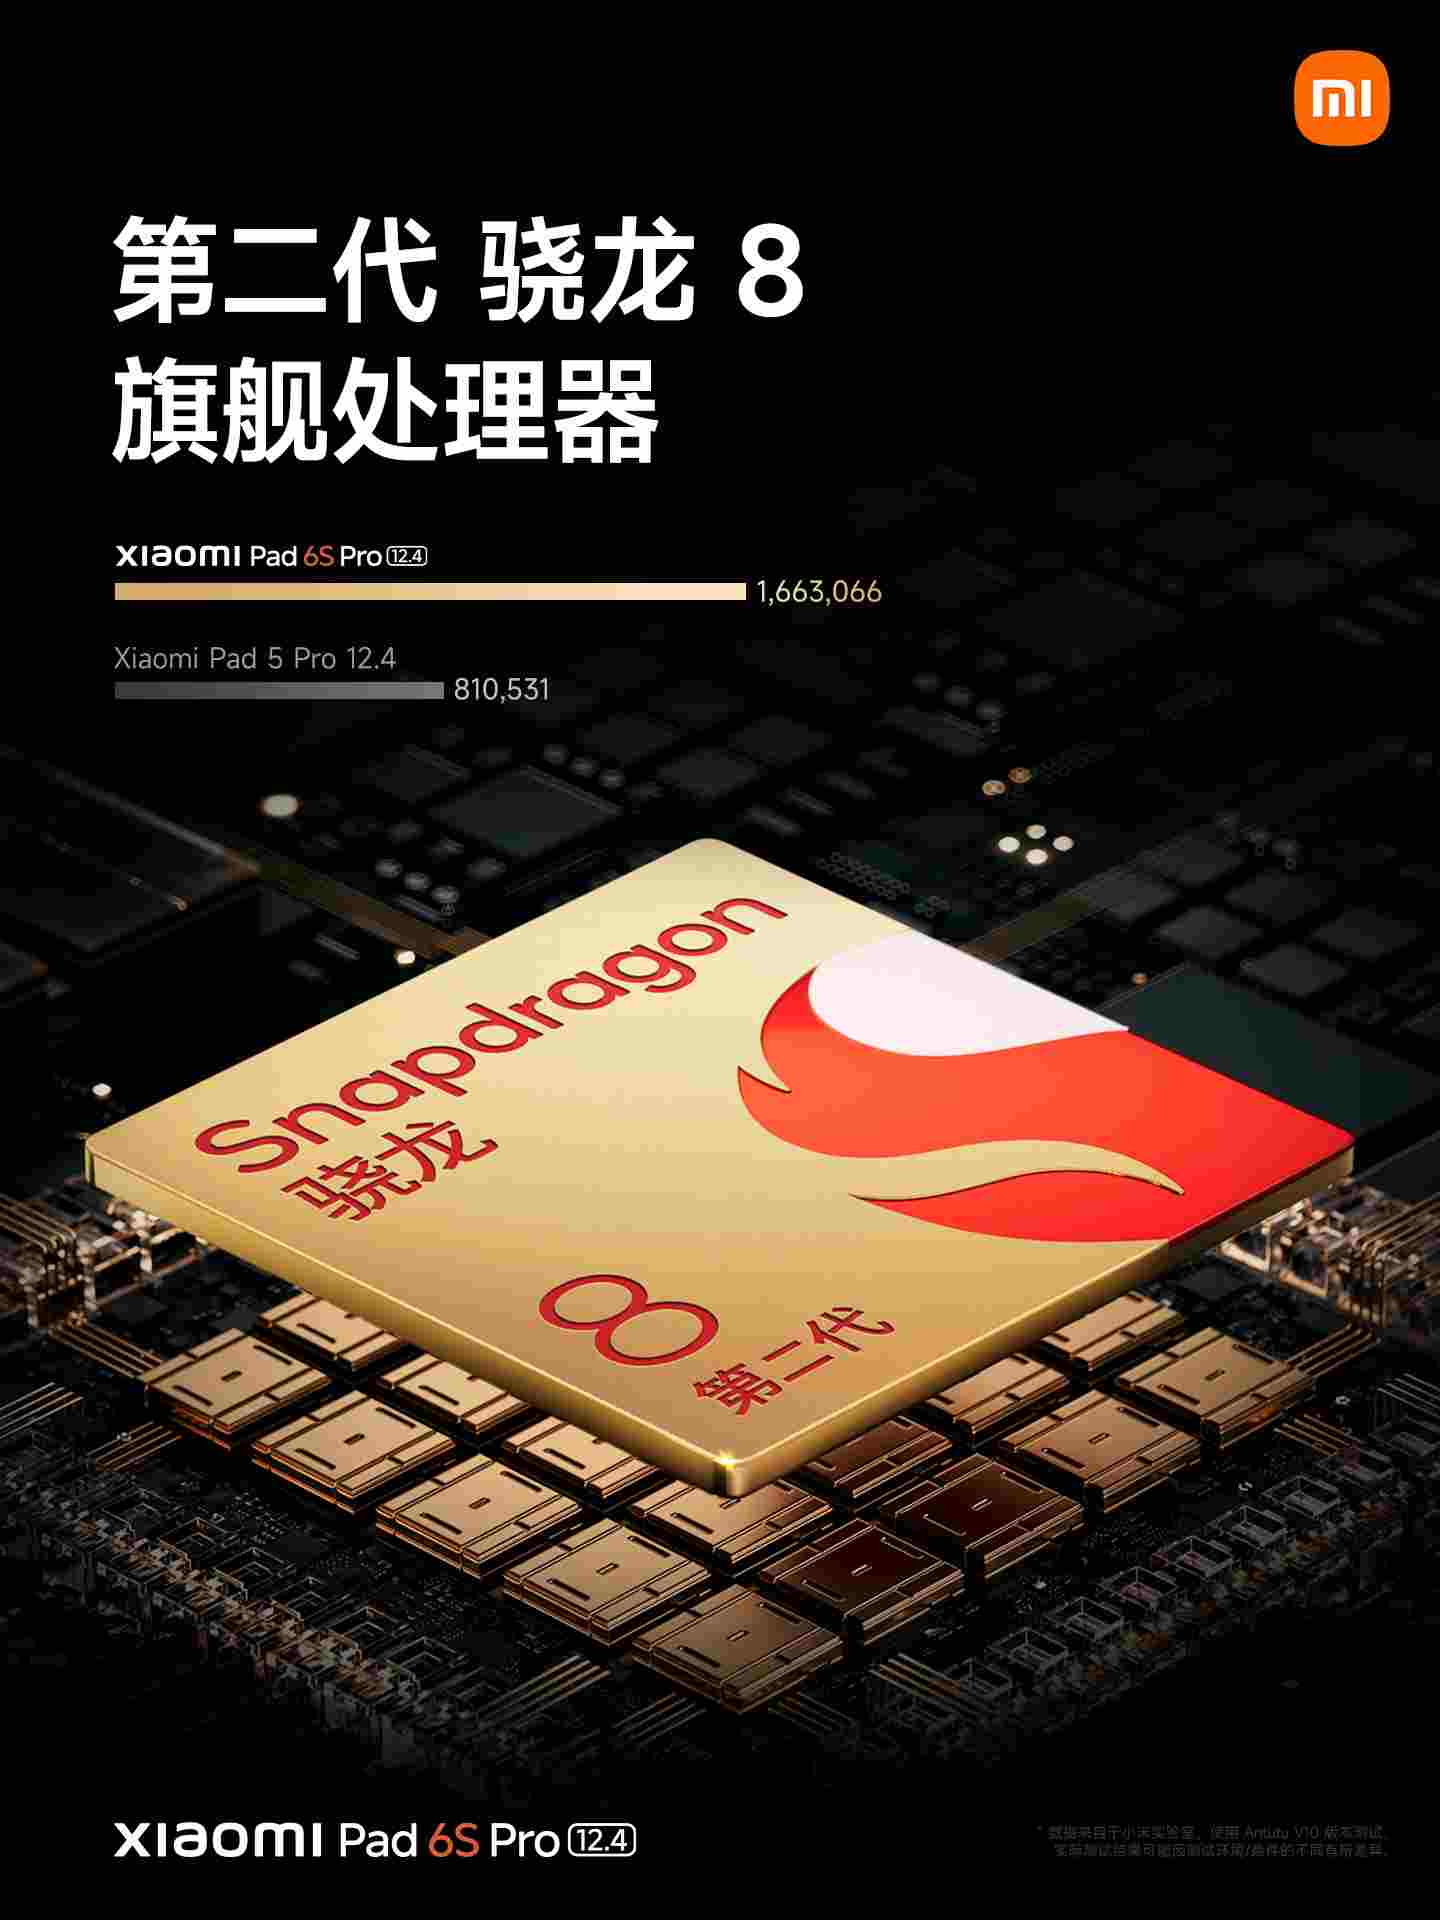 Xiaomi Pad 6s Pro trang bị con chip Snapdragon 8 Gen 2